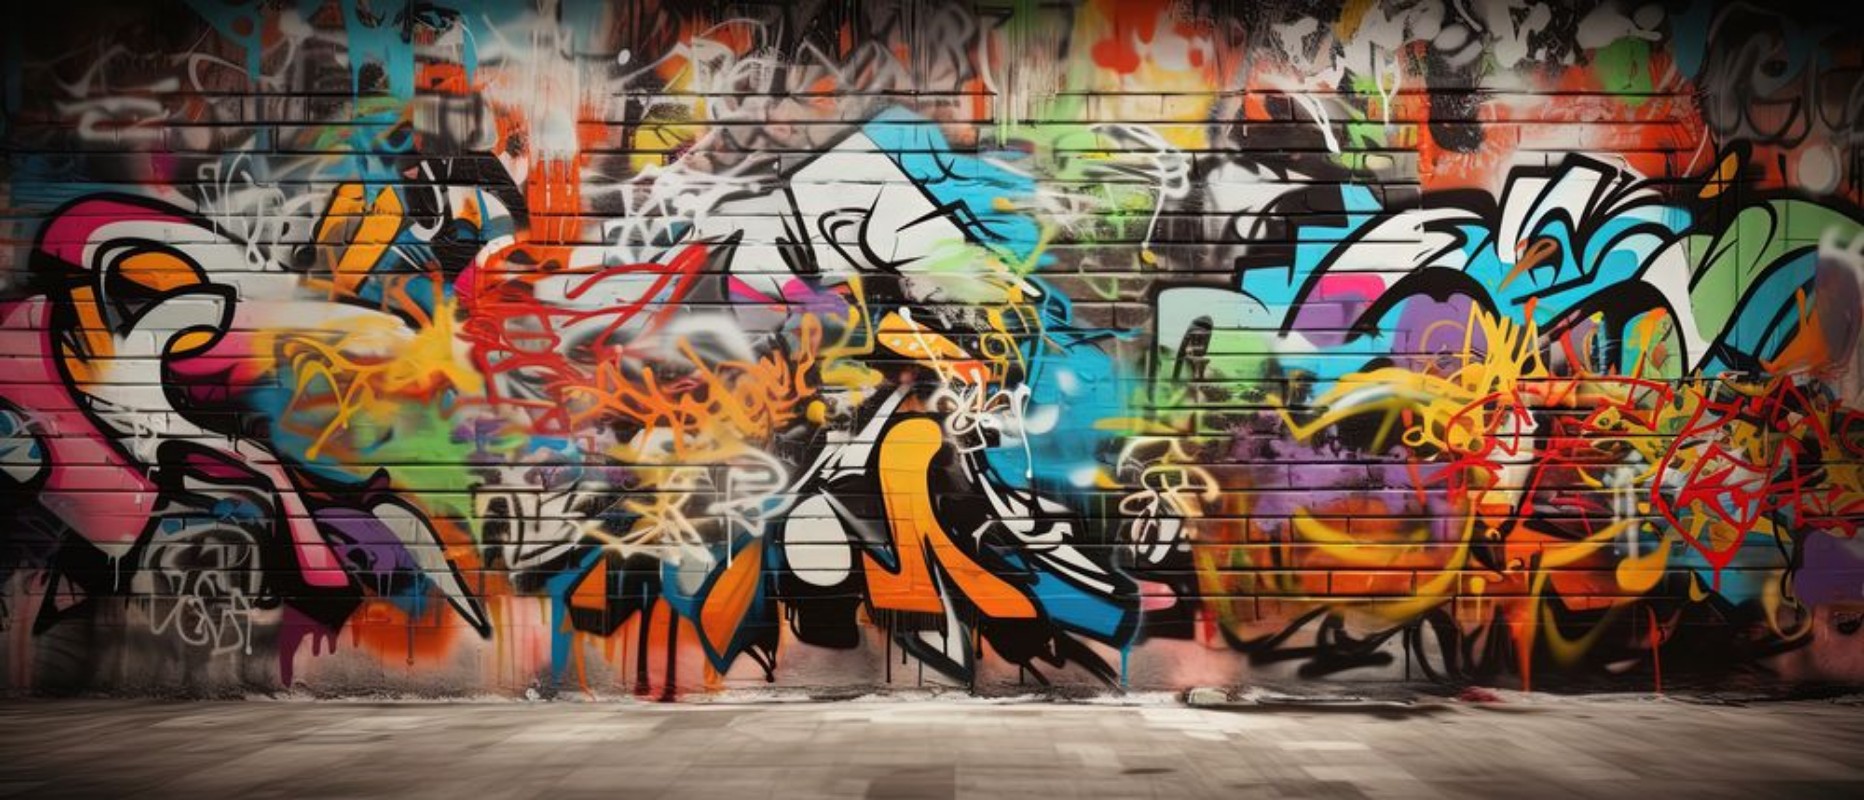 Picture of Graffiti Wall